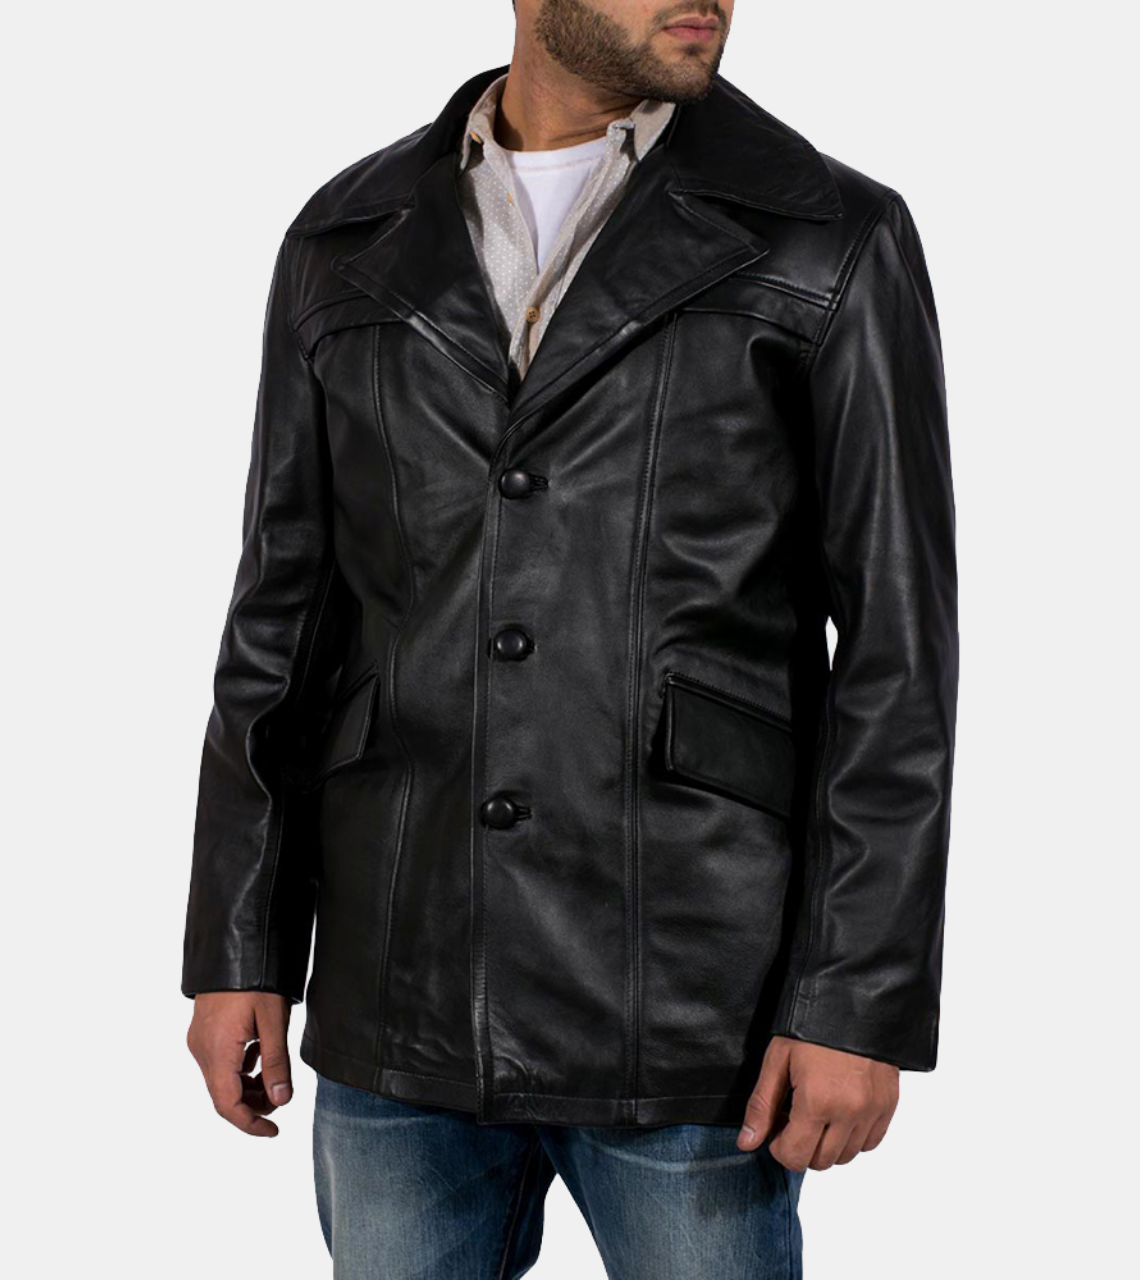  Men's Black Leather Coat 